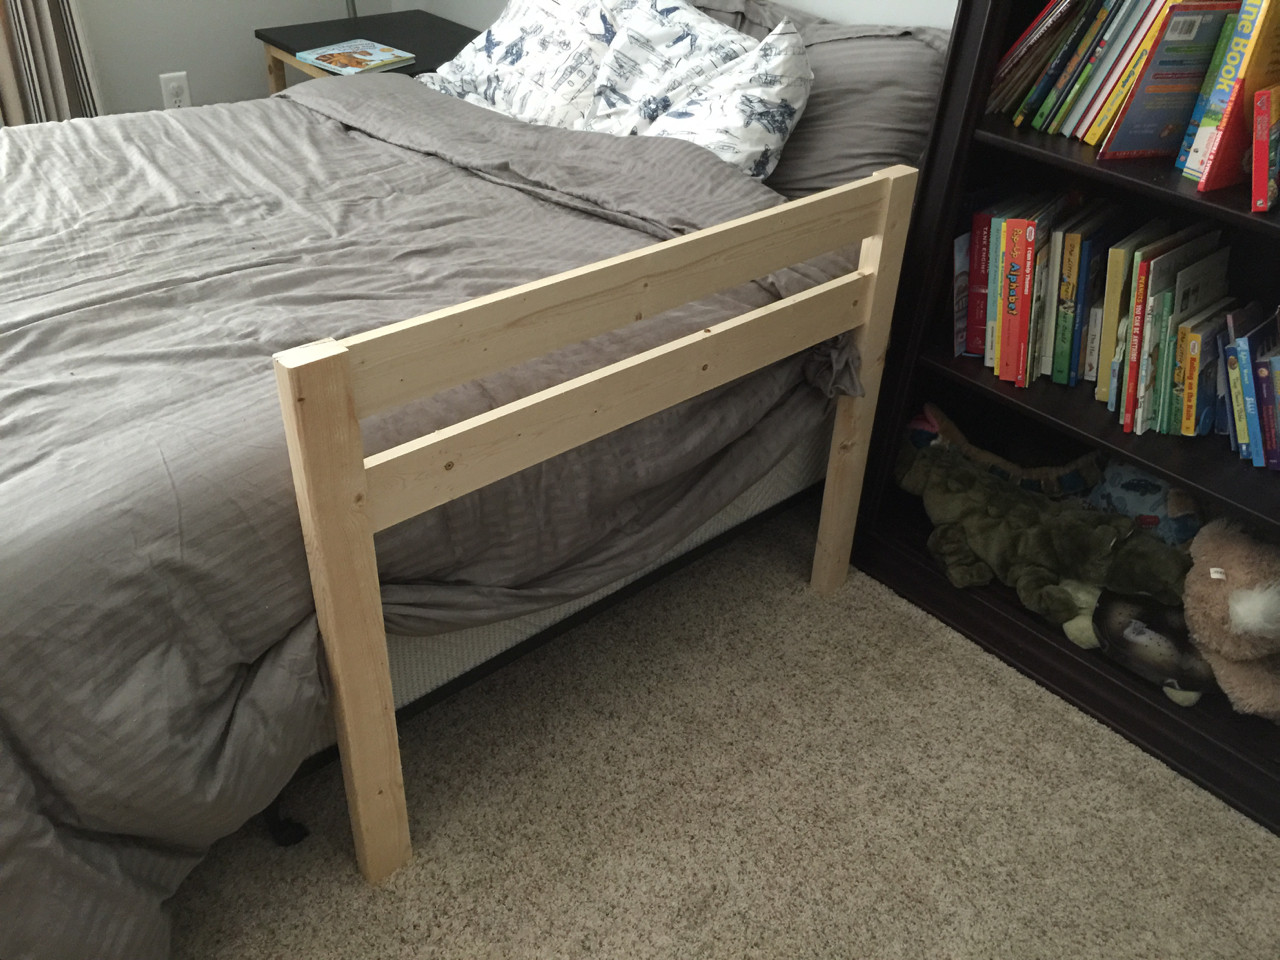 DIY Bed Rail For Toddler
 DIY Toddler Bed Rail Free Plans